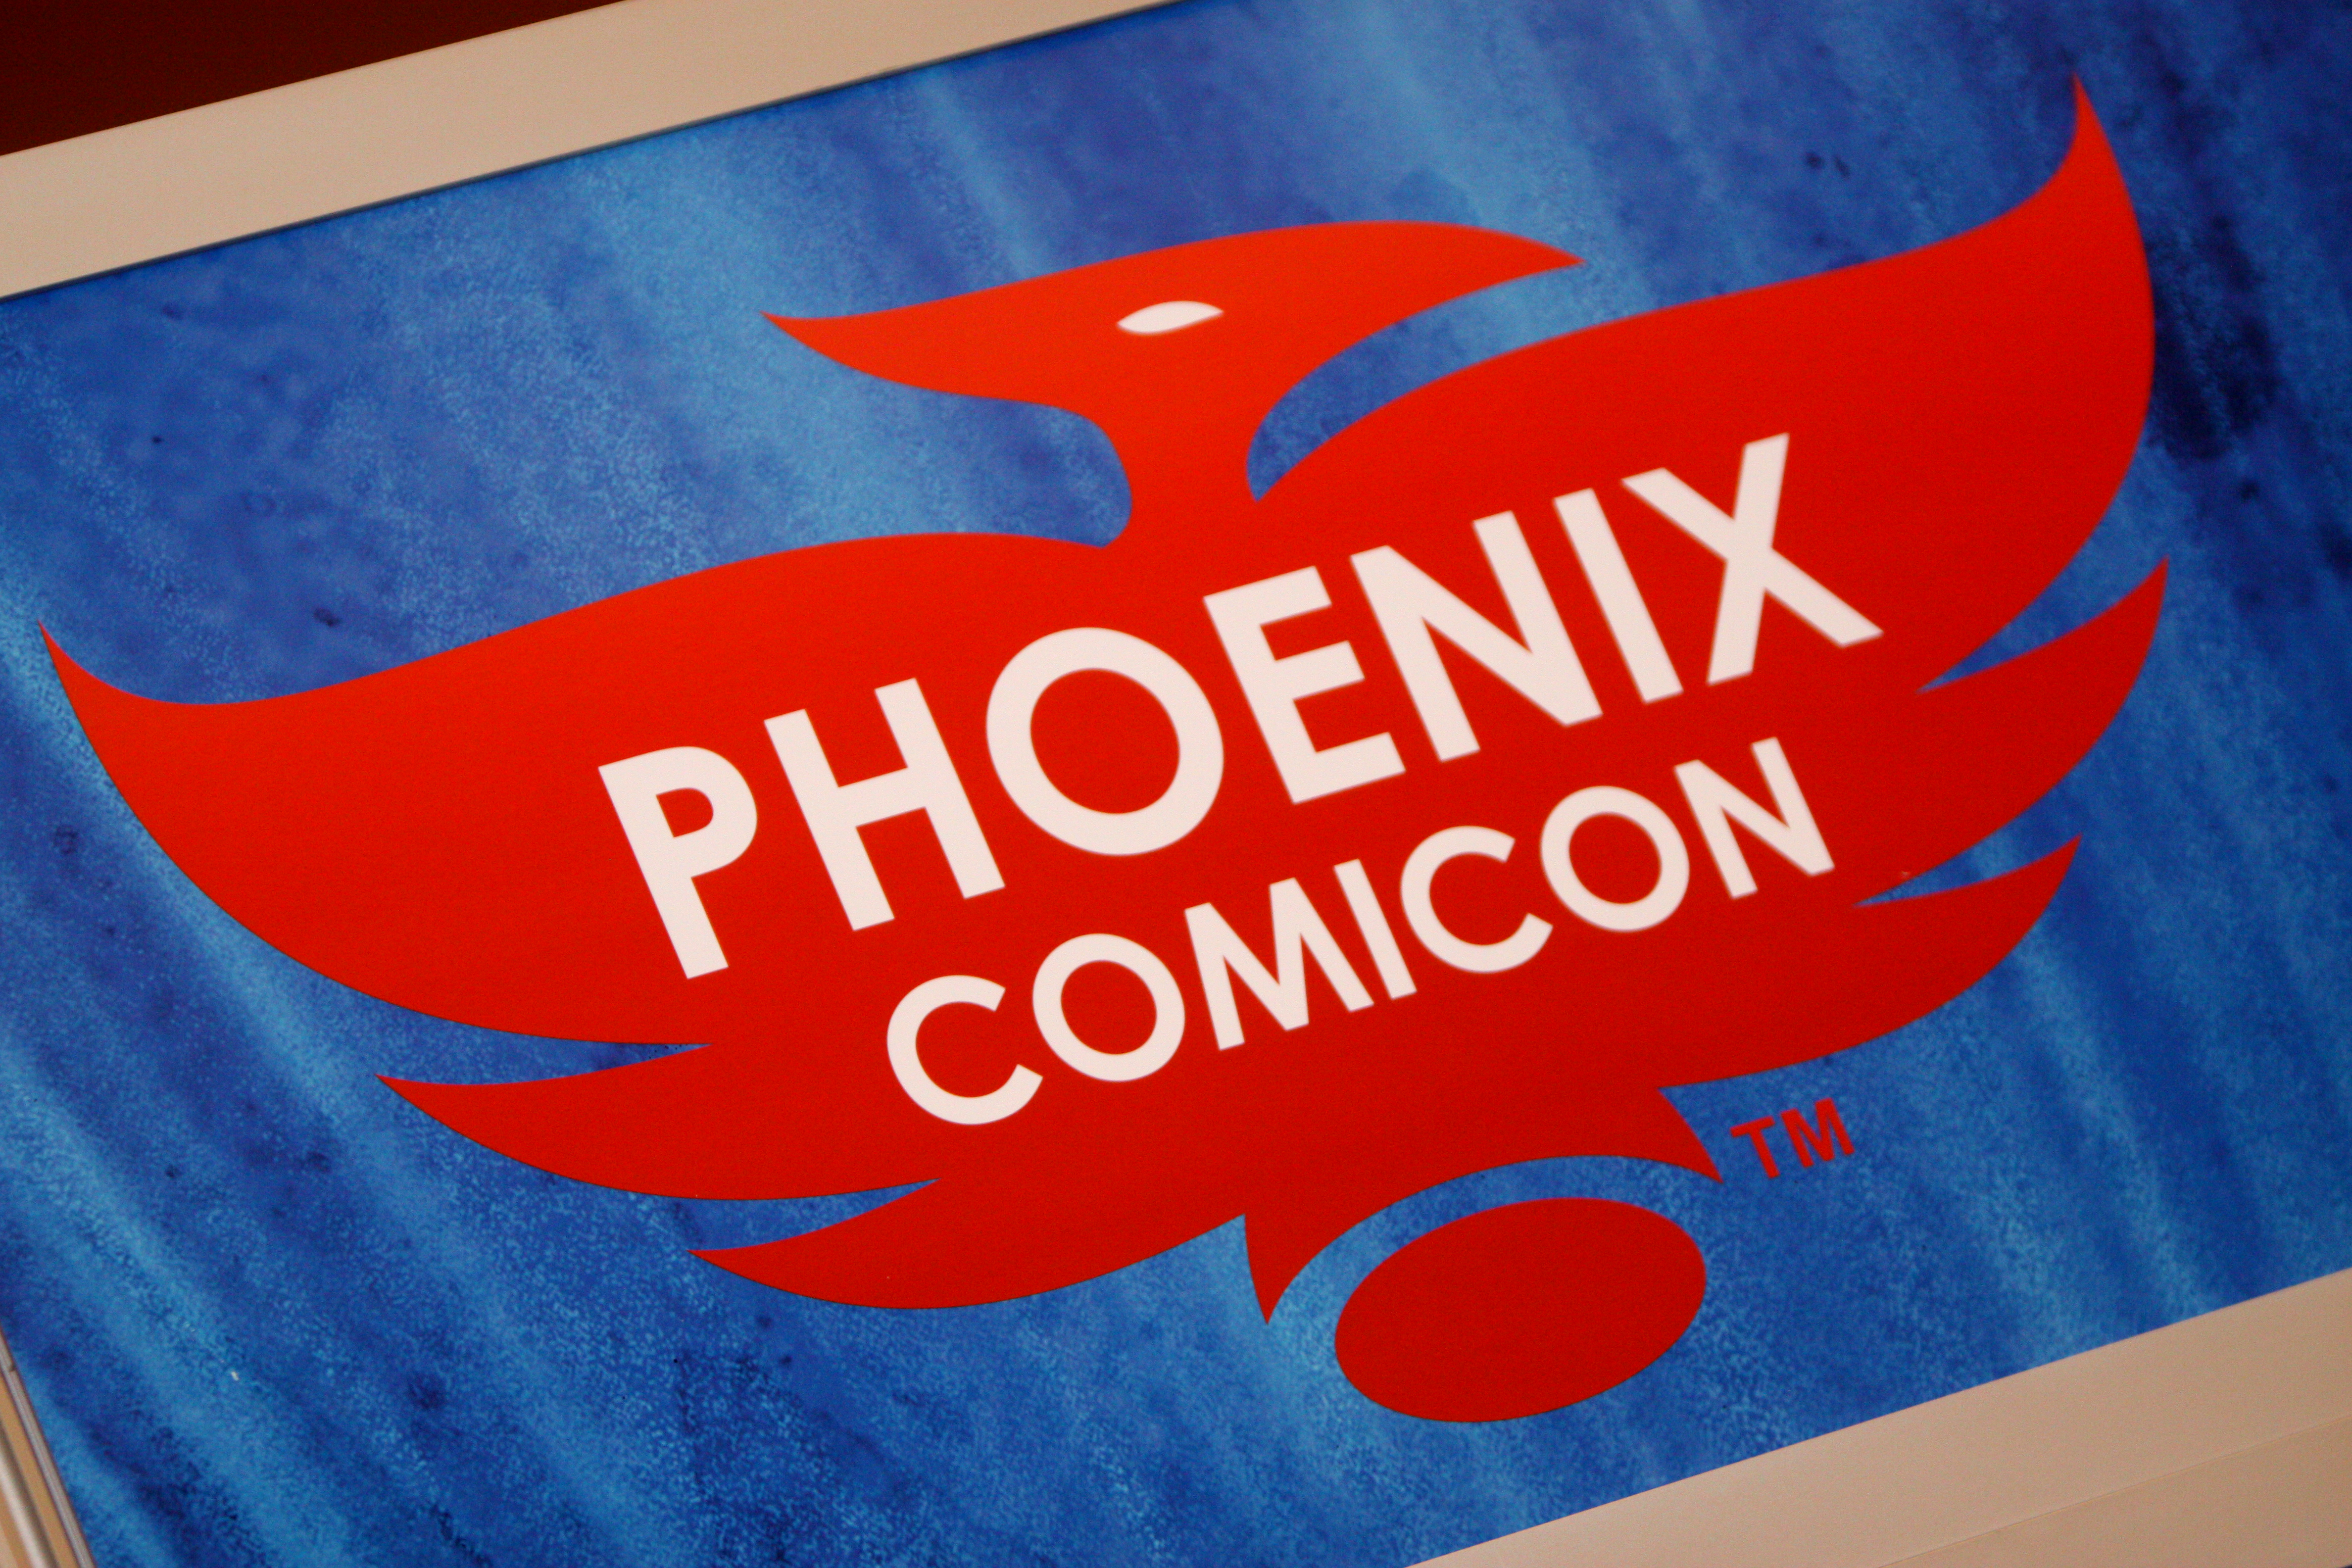 Phoenix_Comicon_logo_(7283593240).jpg